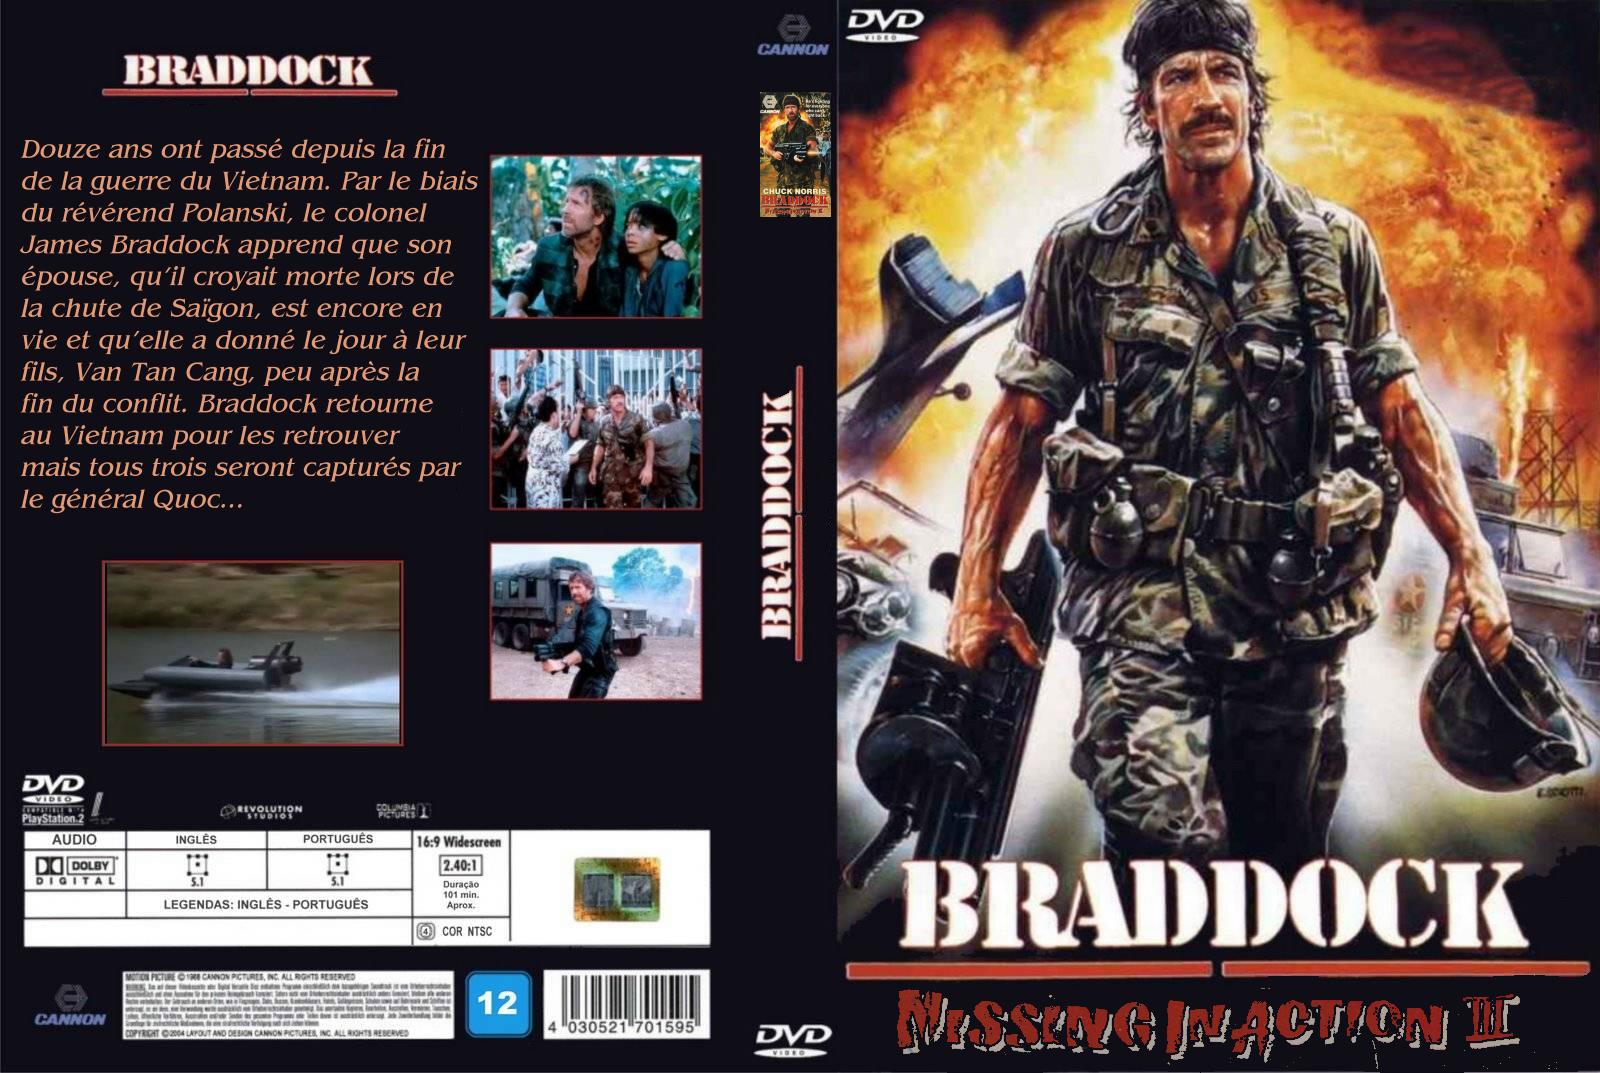 Jaquette DVD Braddock custom